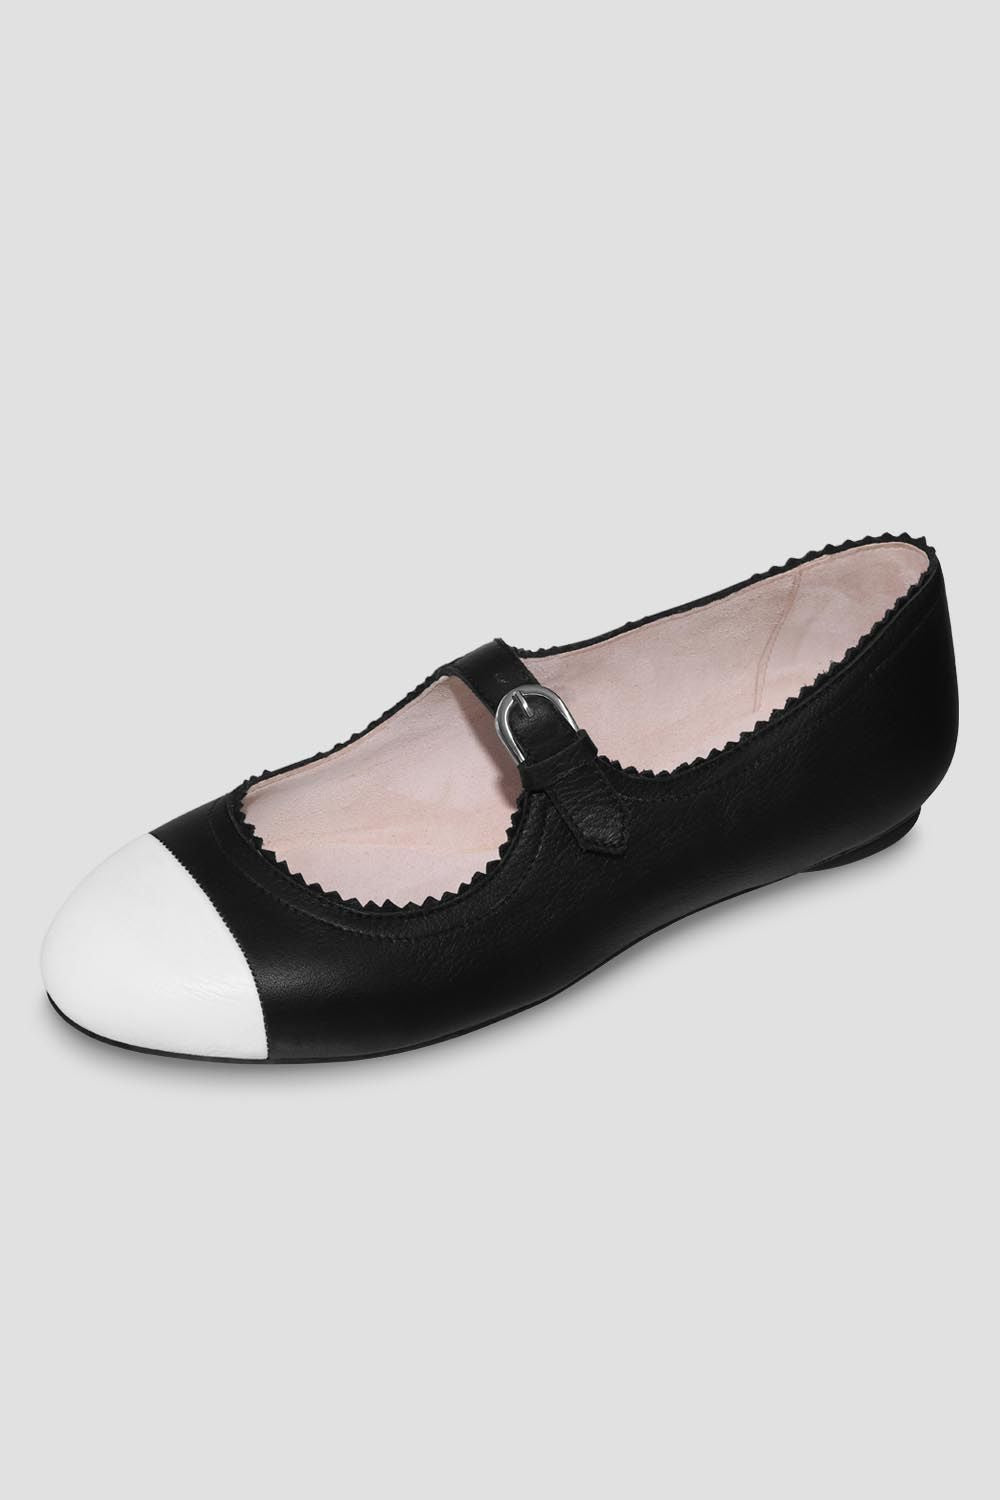 Chanel Black Two-tone Leather Ballet Flats - Size 38.5 EU/ 8.5 US